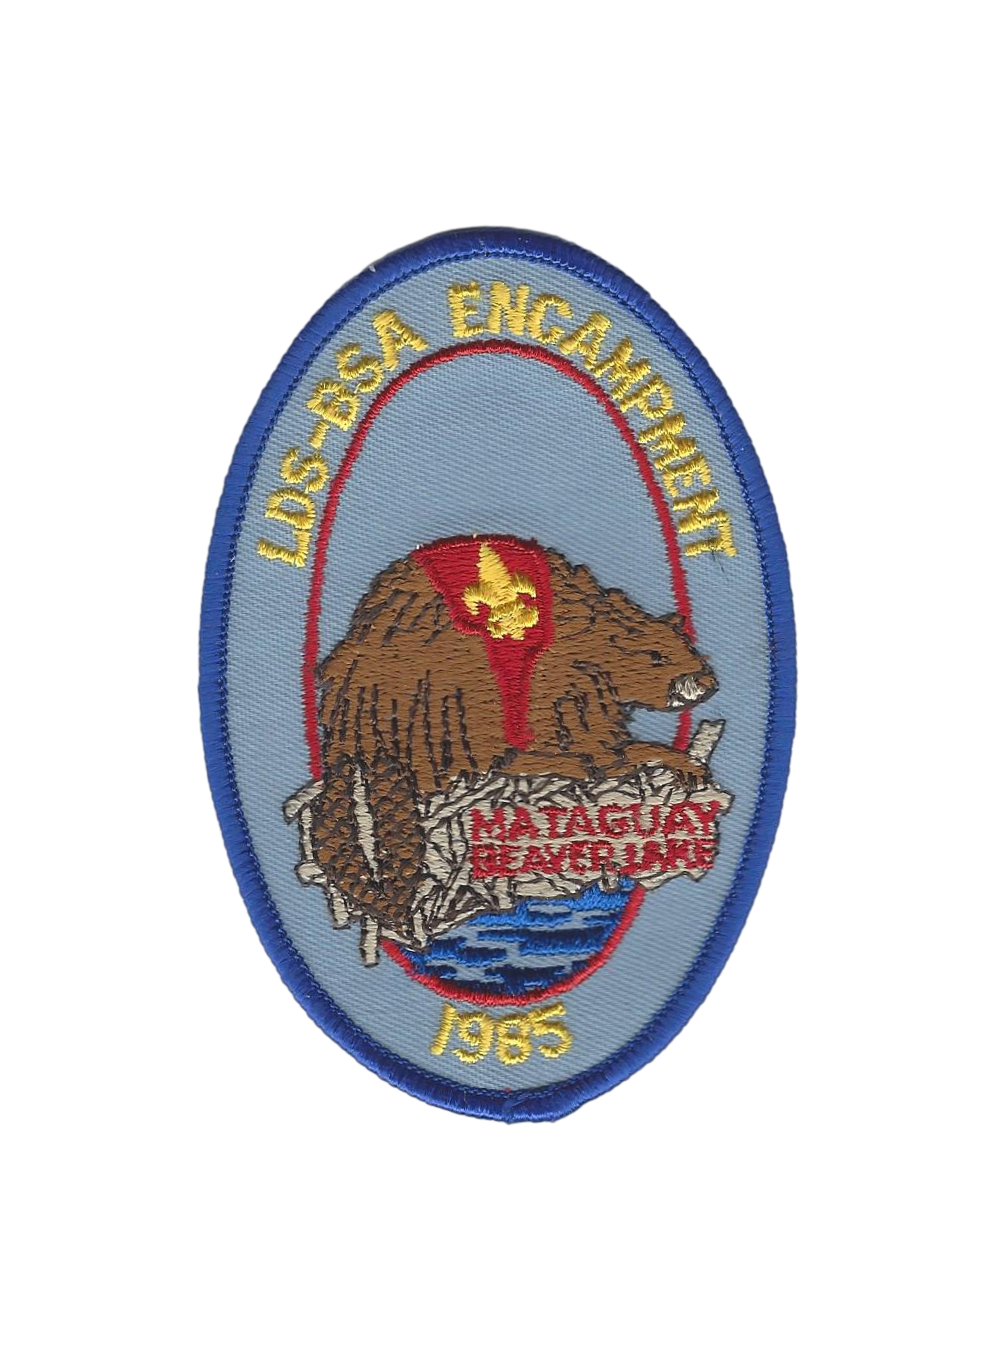 1985 LDS-BSA Encampment Patch - Mataguay-Beaver Lake